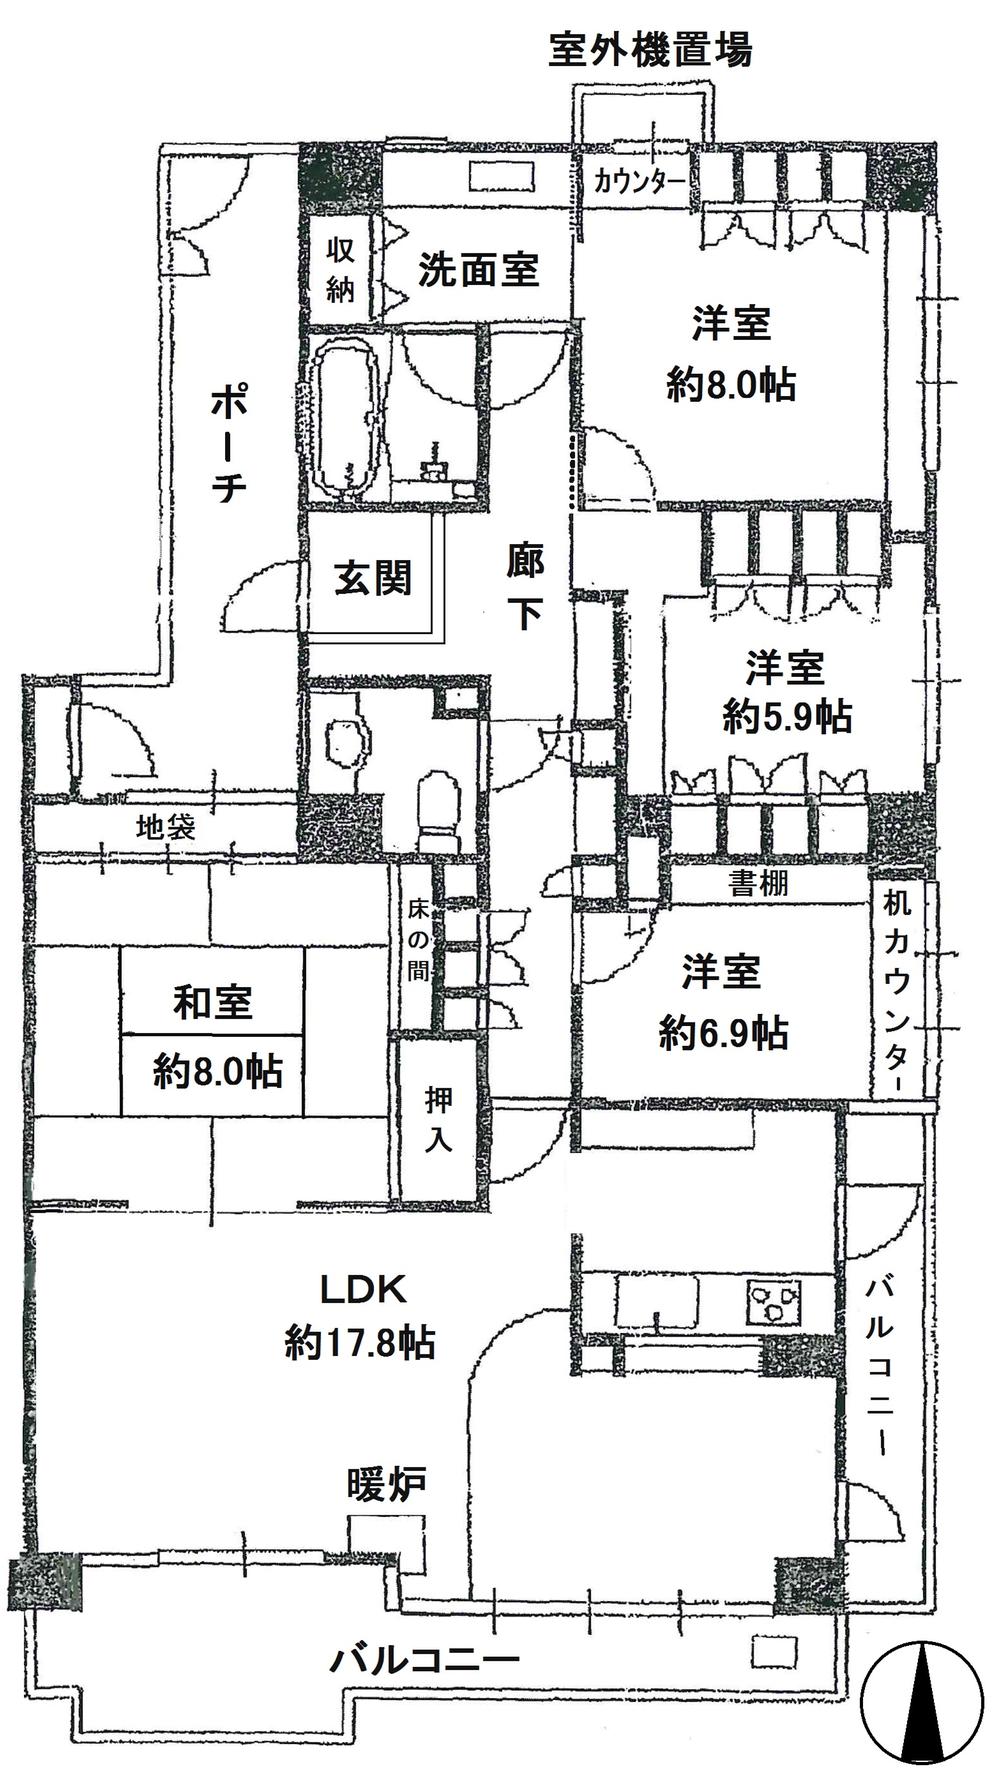 Floor plan. 4LDK, Price 30,800,000 yen, Footprint 115.21 sq m , Balcony area 20.8 sq m